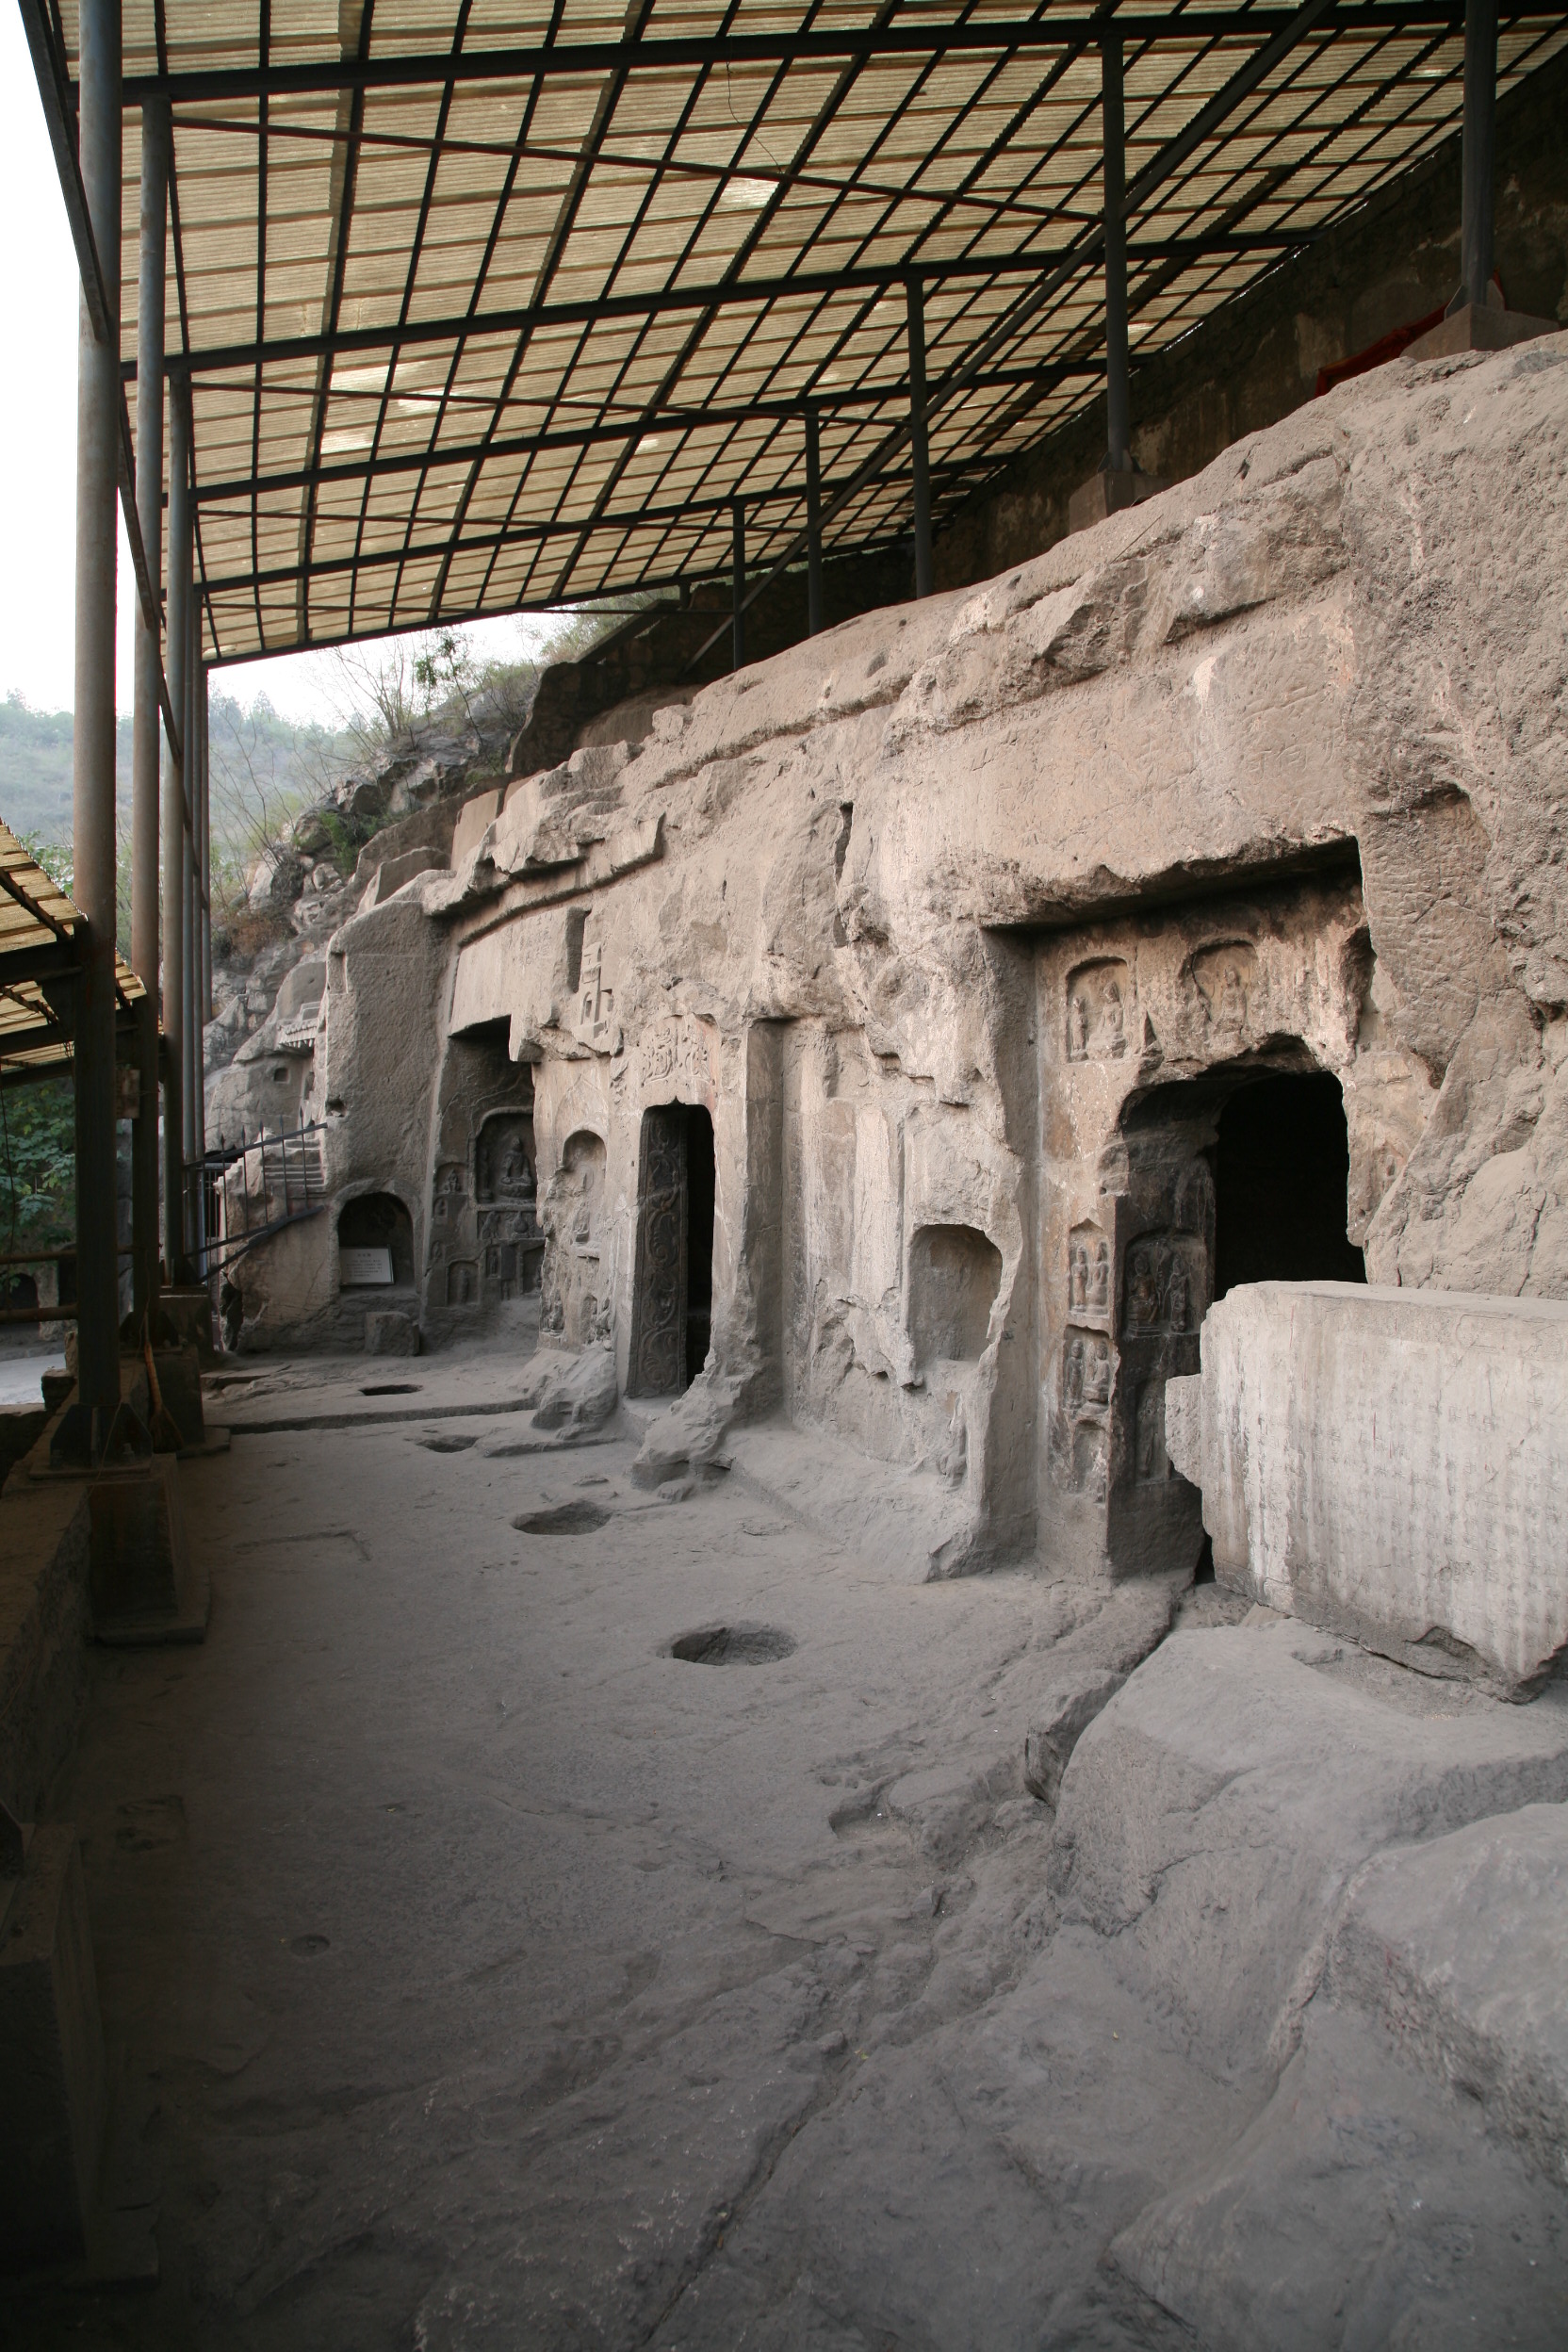 Caves 4 - 6 exterior